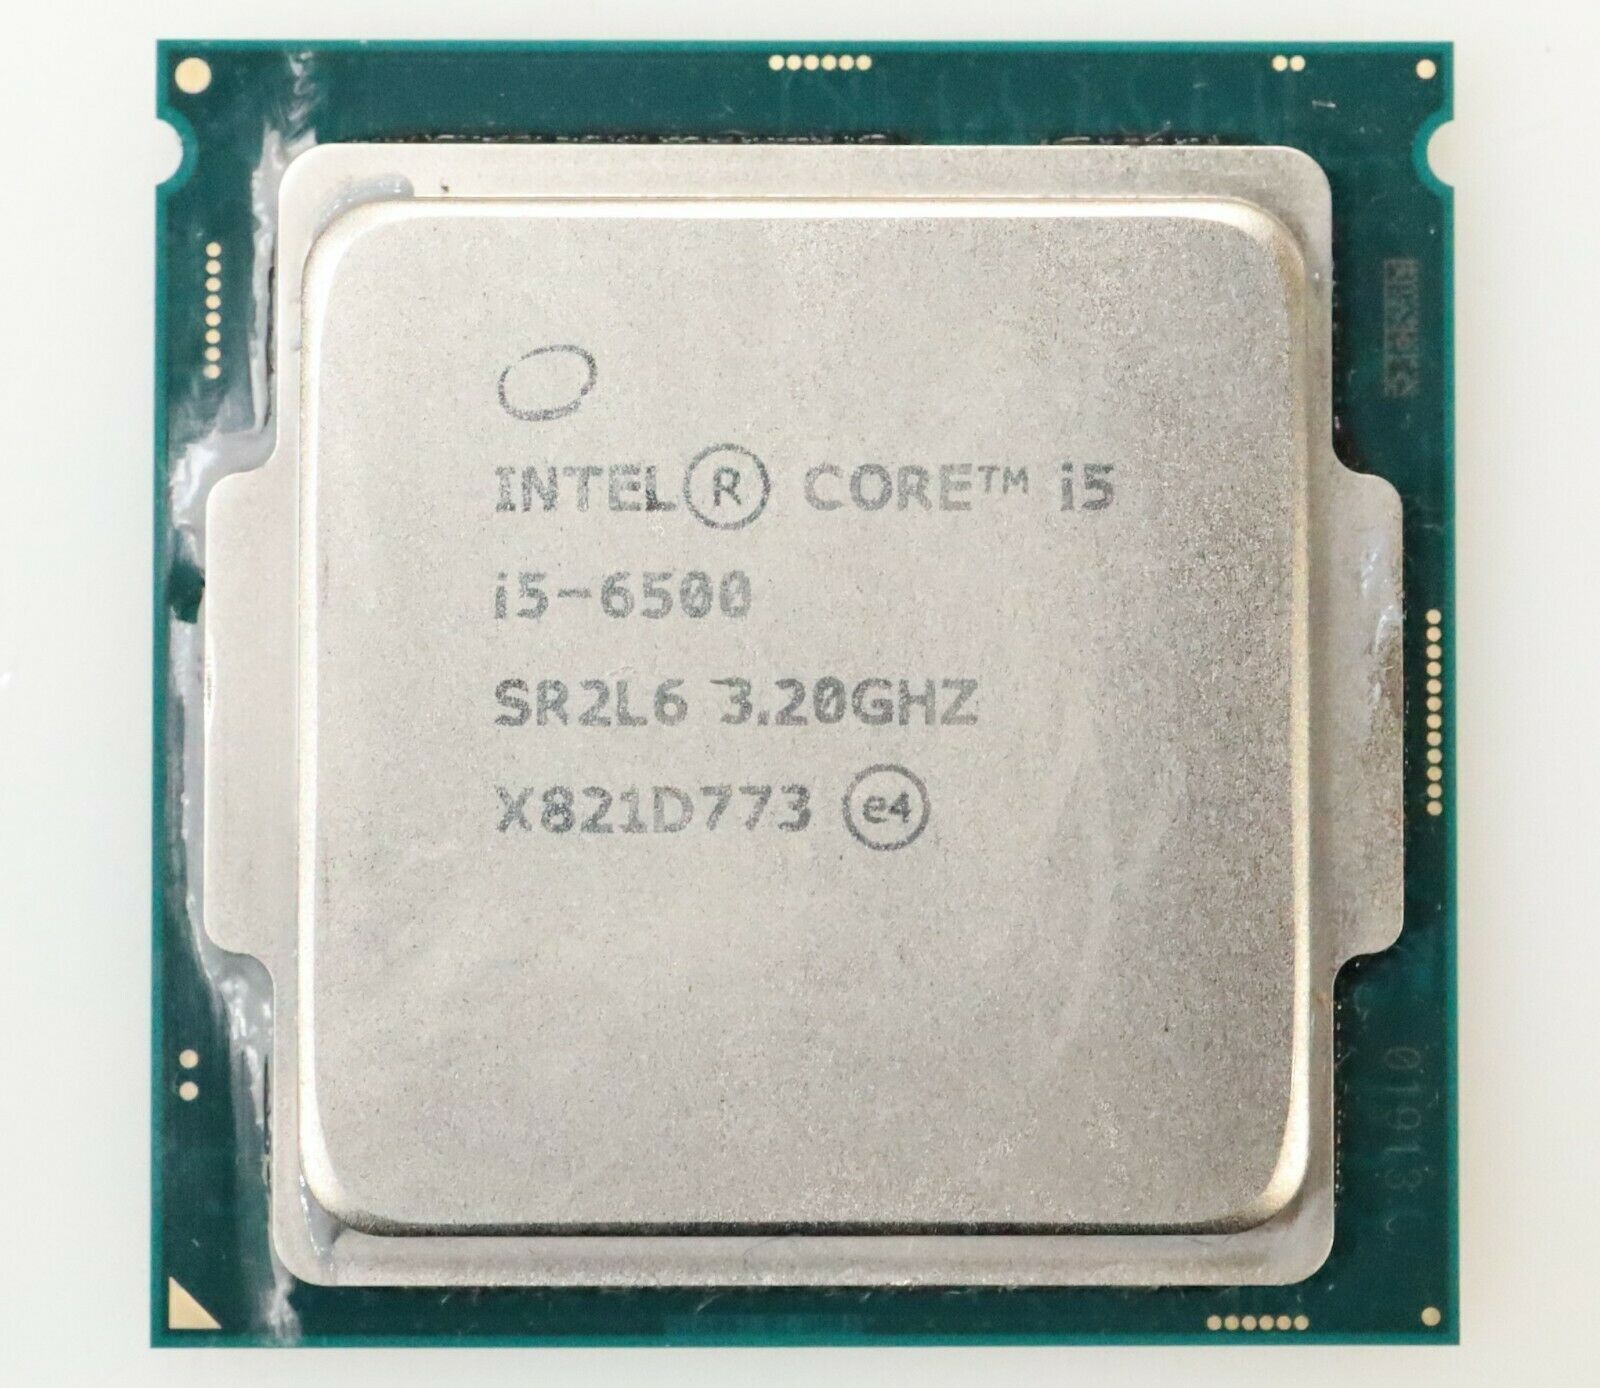 Intel Core i5-6500 3.20GHz SR2L6 Quad-Core CPU Processor 